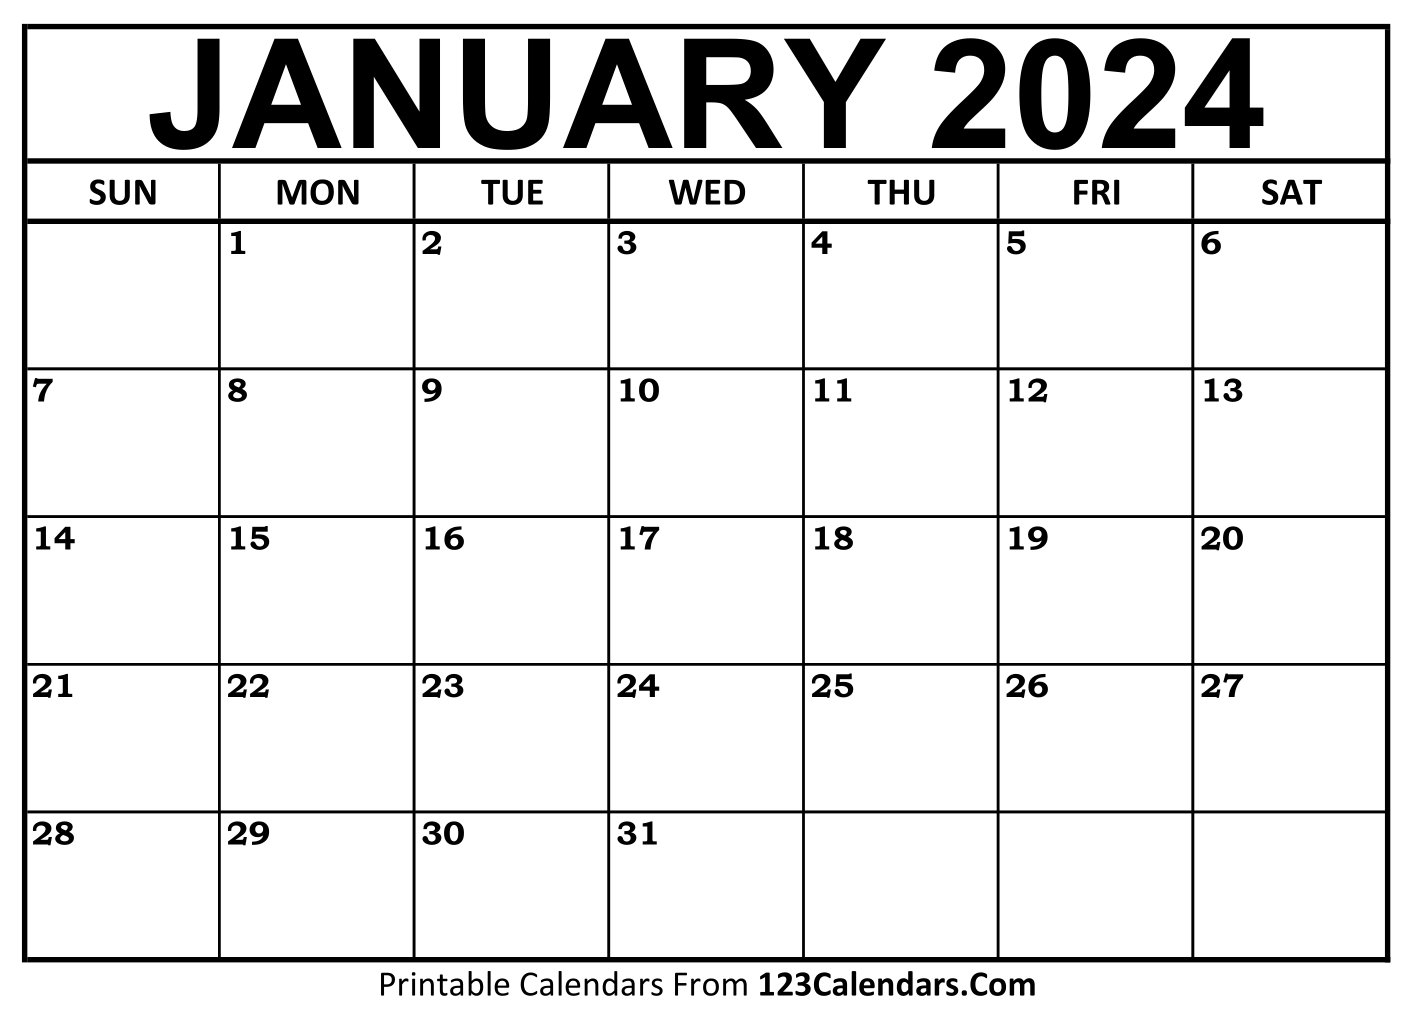 Printable January 2024 Calendar Templates - 123Calendars for Calendar Free Printable January 2024